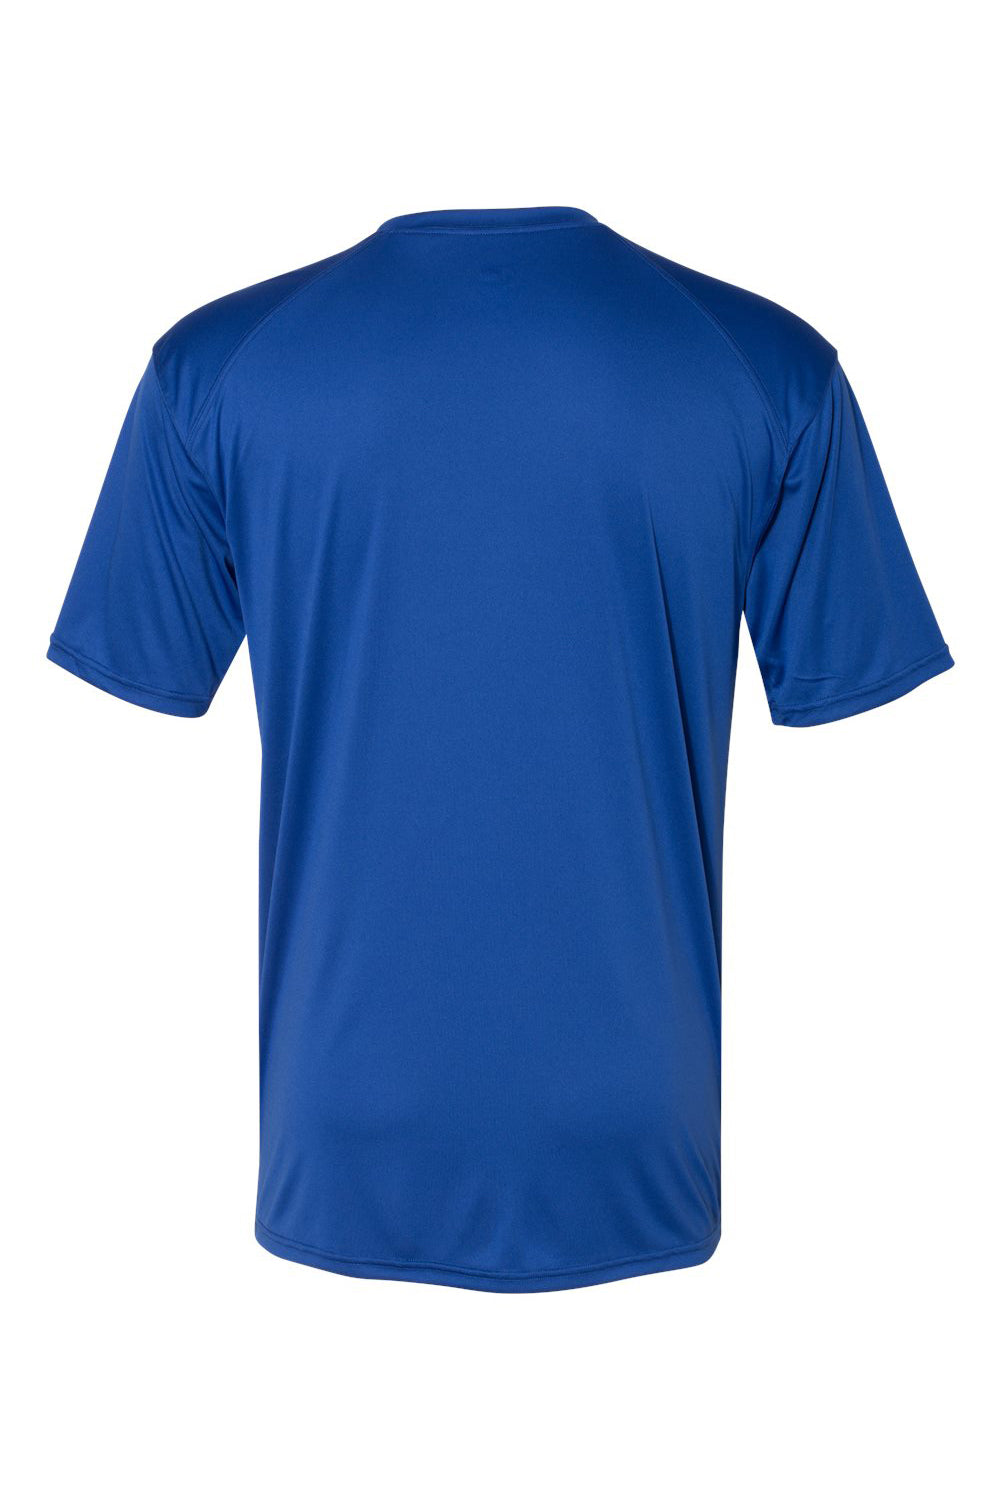 Badger 4020 Mens Ultimate SoftLock Moisture Wicking Short Sleeve Crewneck T-Shirt Royal Blue Flat Back